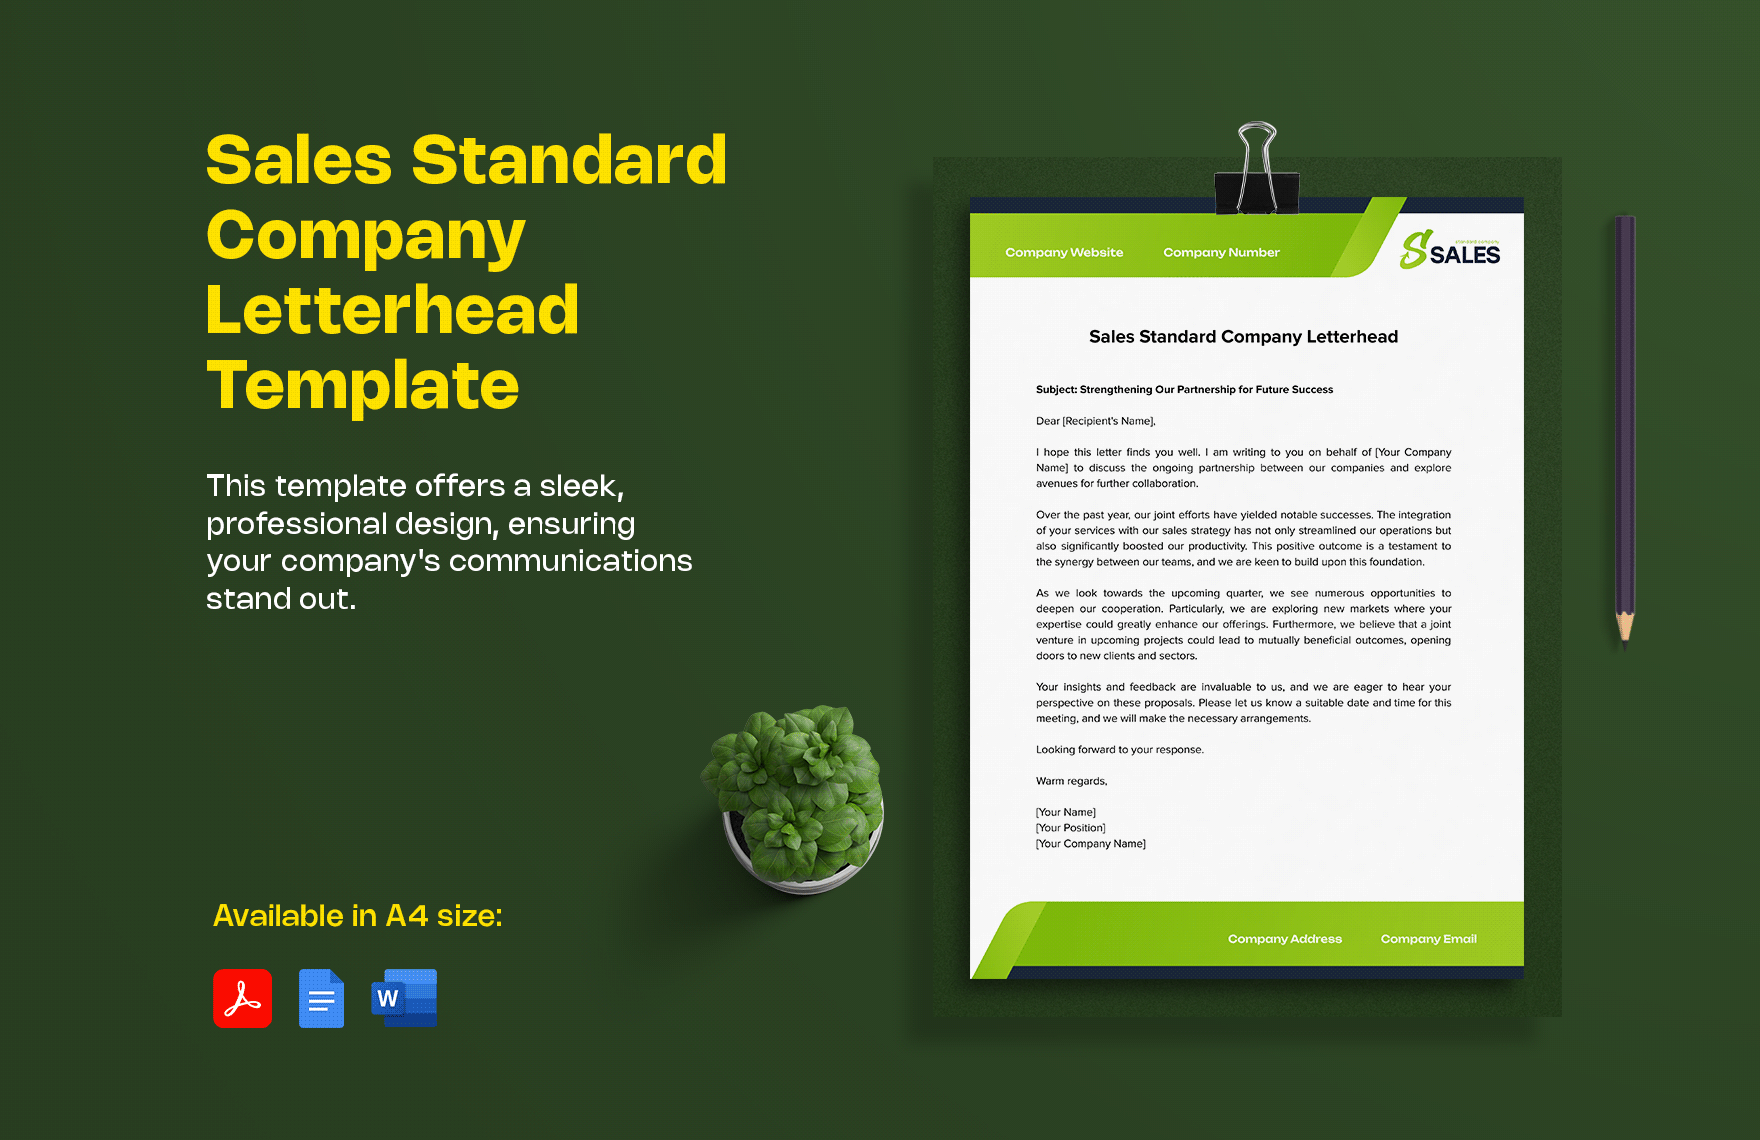 Sales Standard Company Letterhead Template